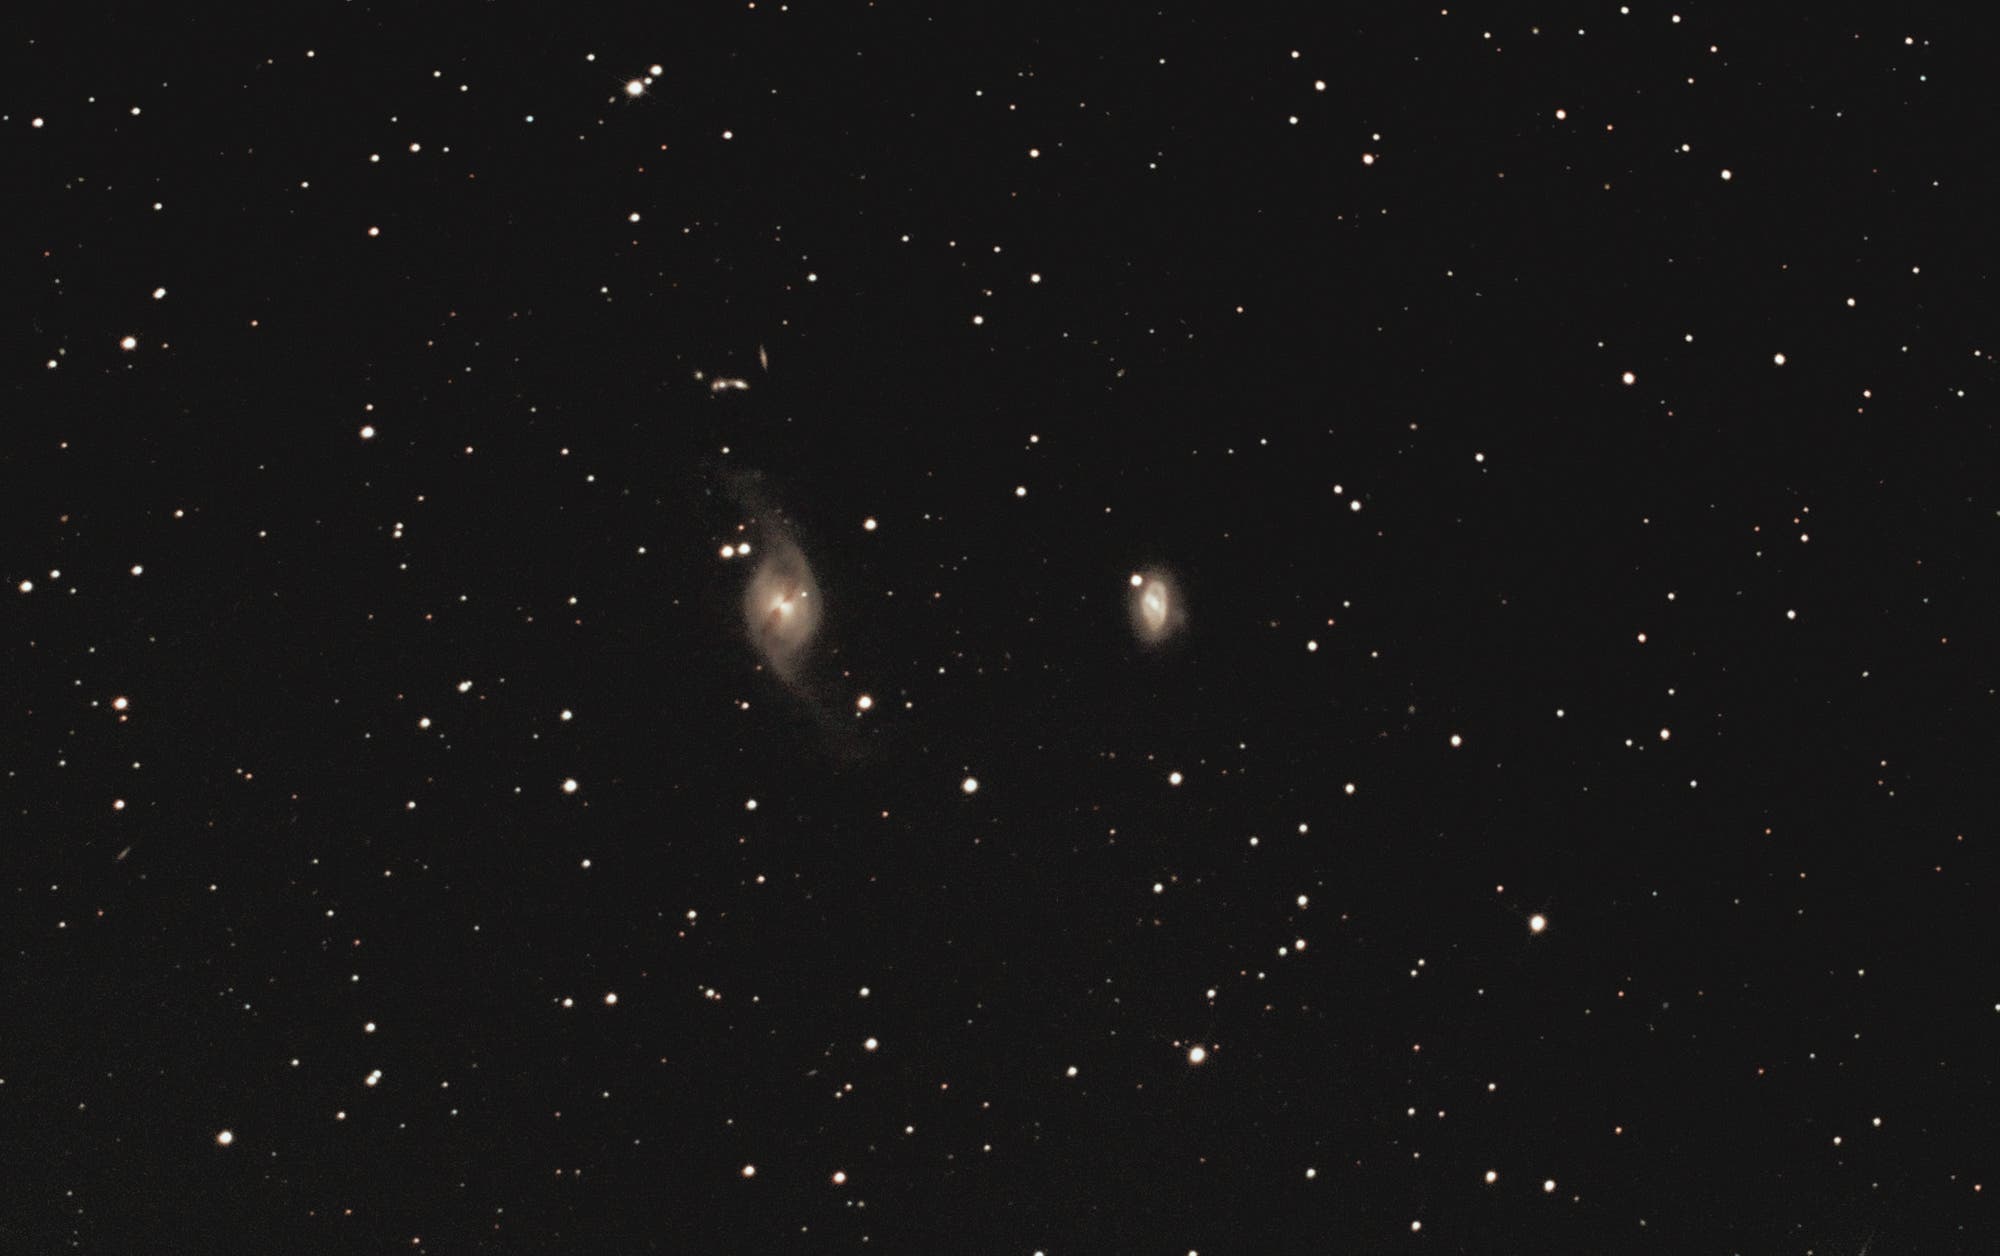 Galaxiengruppe um NGC 3718 in Ursa Major (Großer Bär)